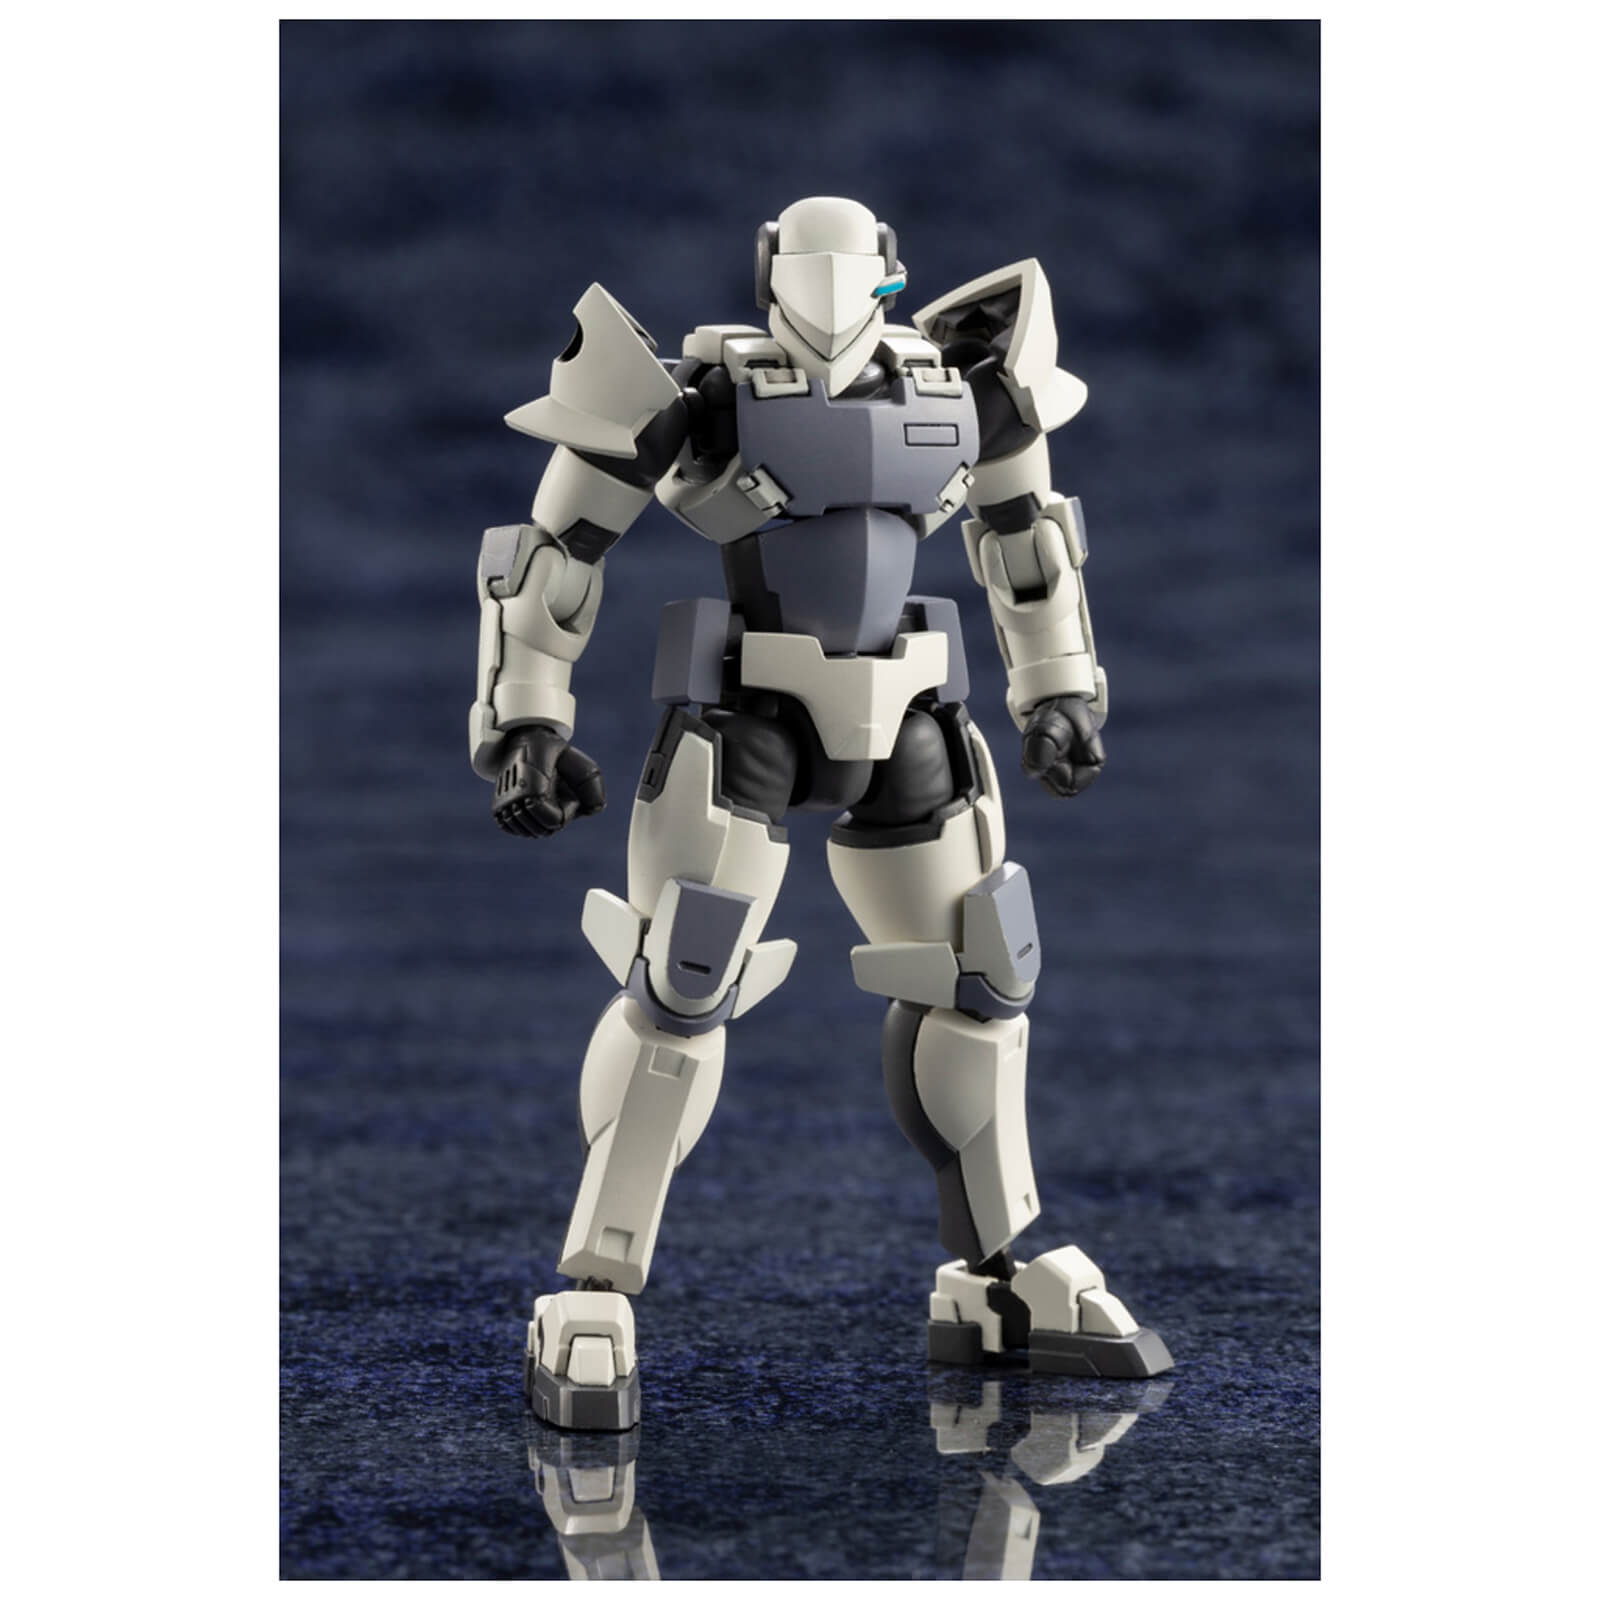 Kotobukiya Hexa Gear Governor Plastic Model Kit - Armor Type: Pawn A1 (Ver. 1.5)